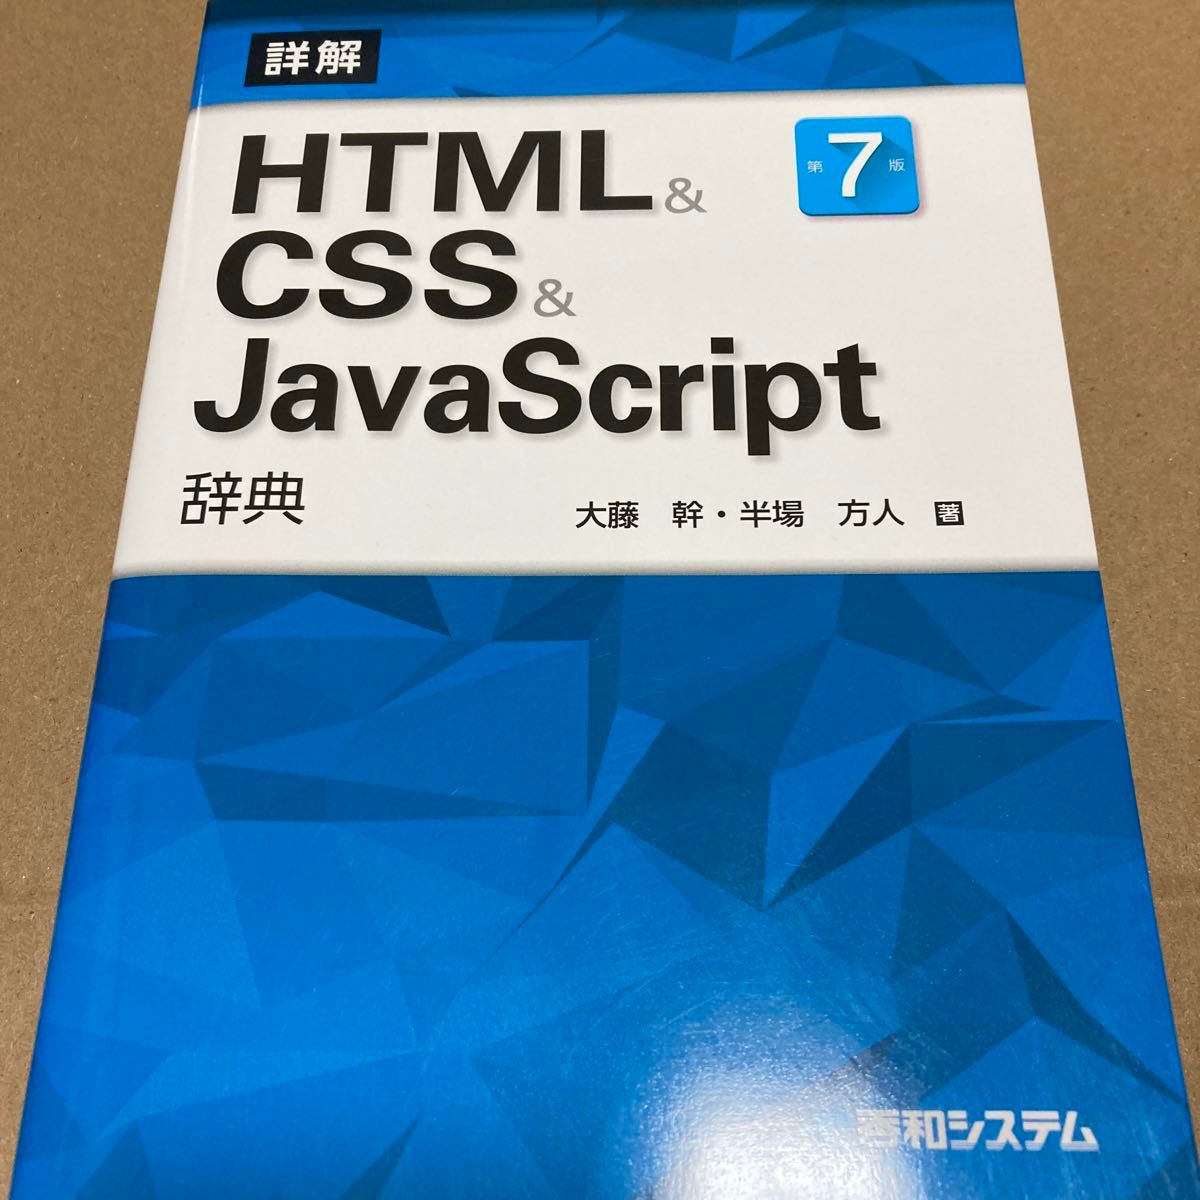 詳解 HTML&CSS&JavaScript 辞典